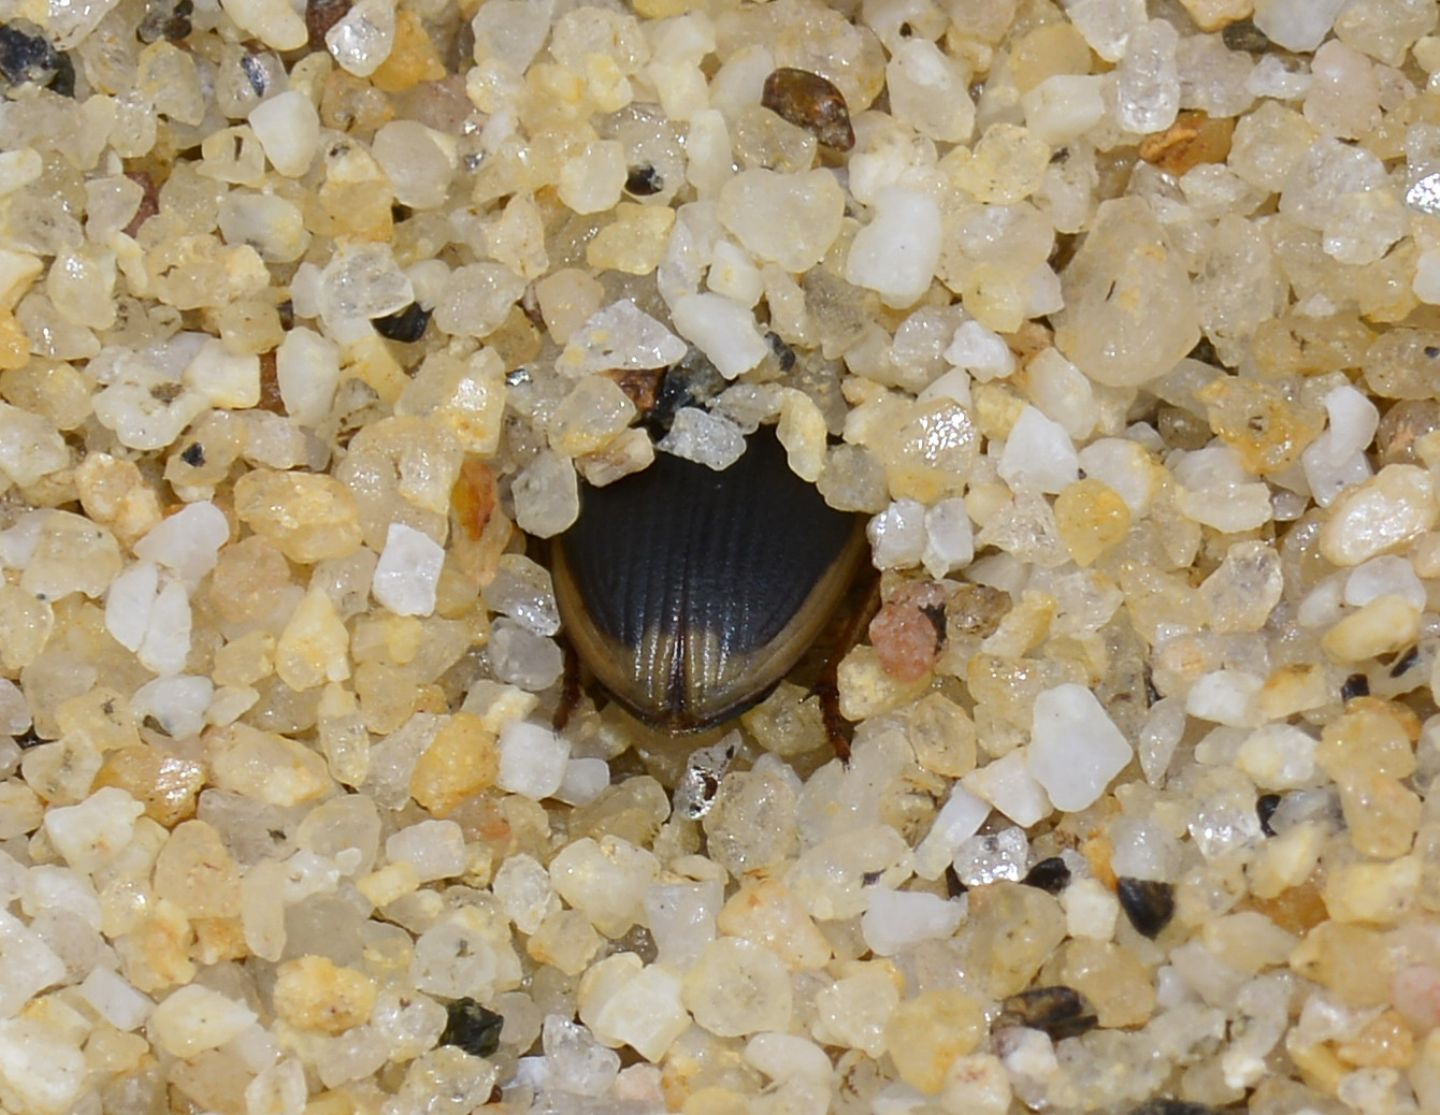 nella sabbia: Phaleria bimaculata ssp. bimaculata (Tenebrionidae)